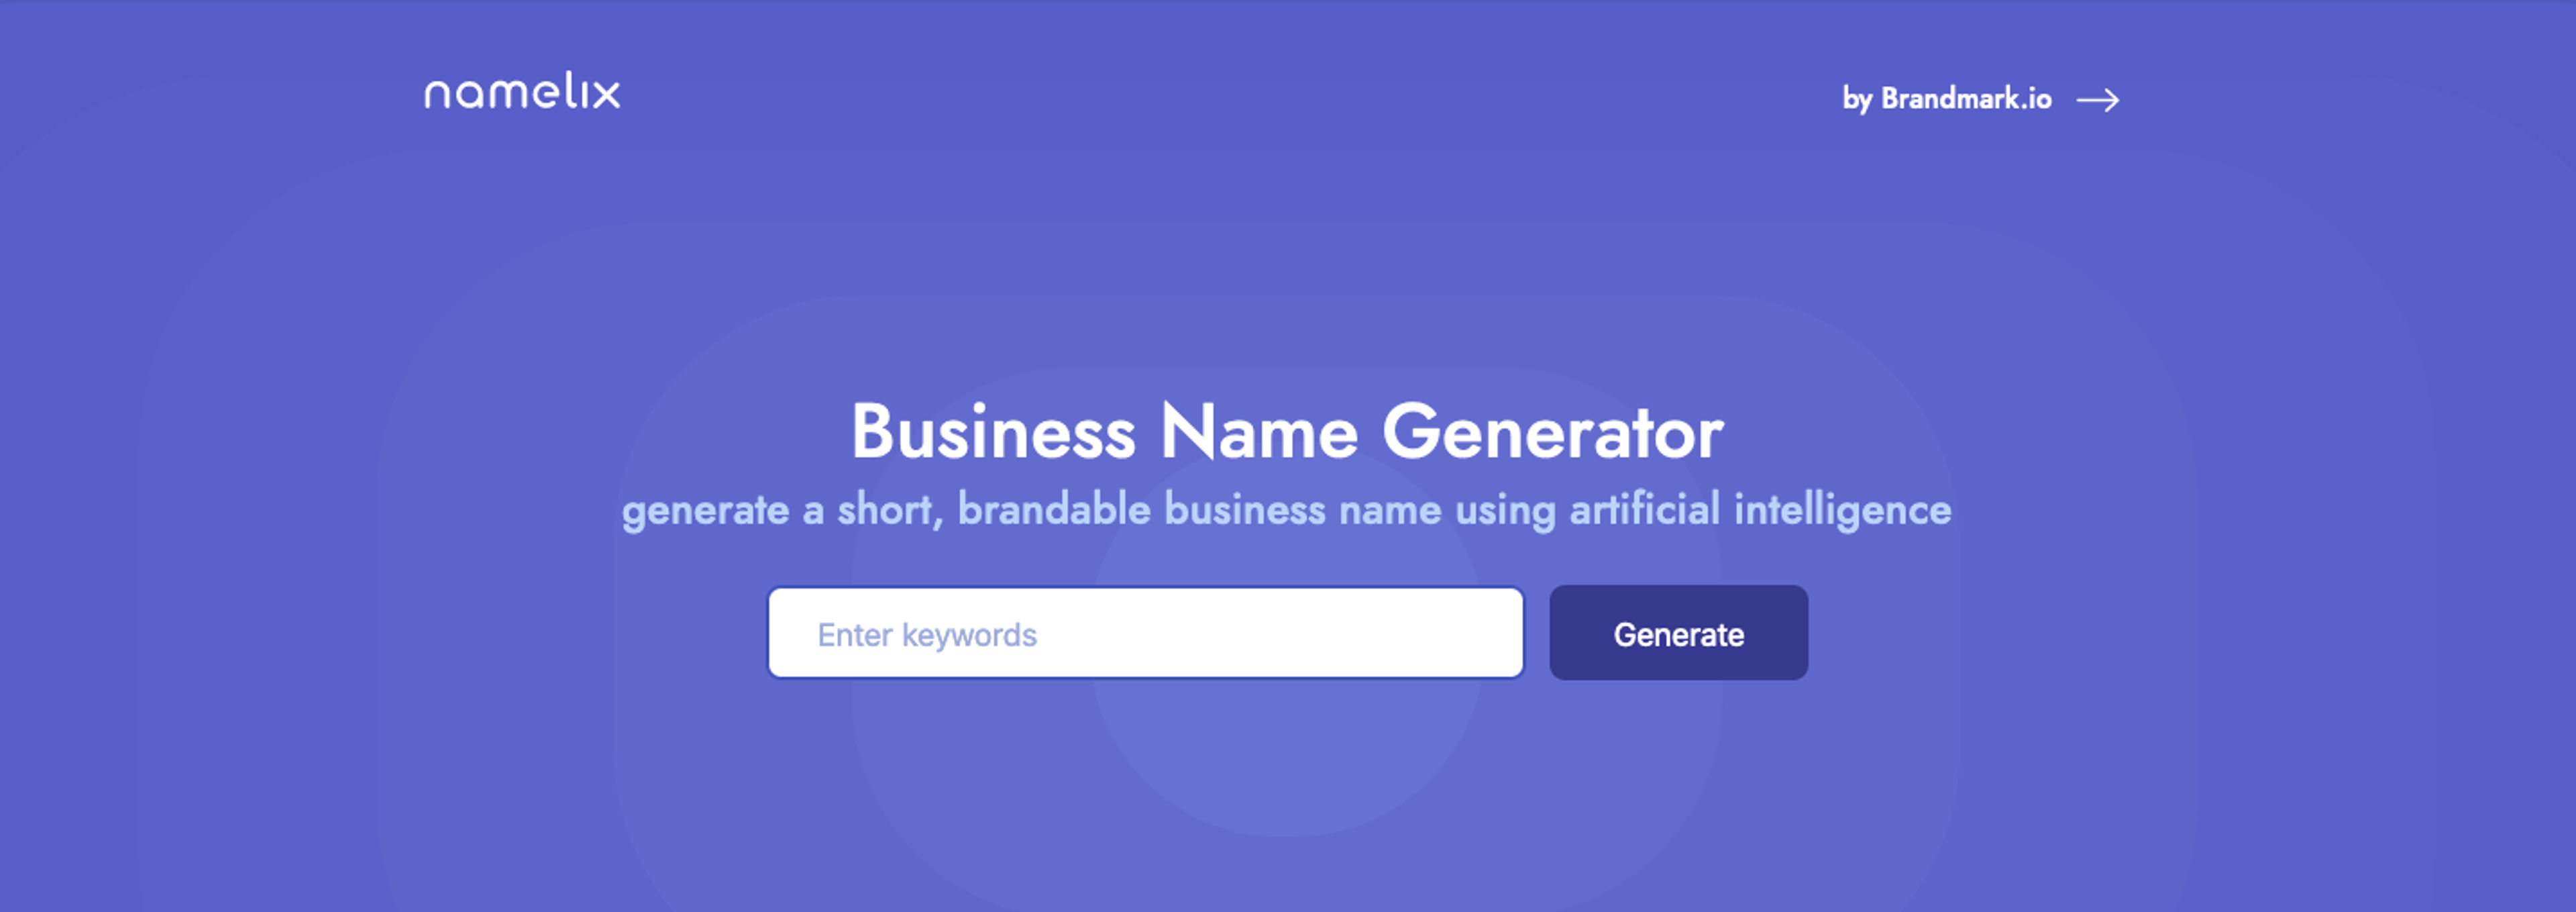 Namelix business name generator